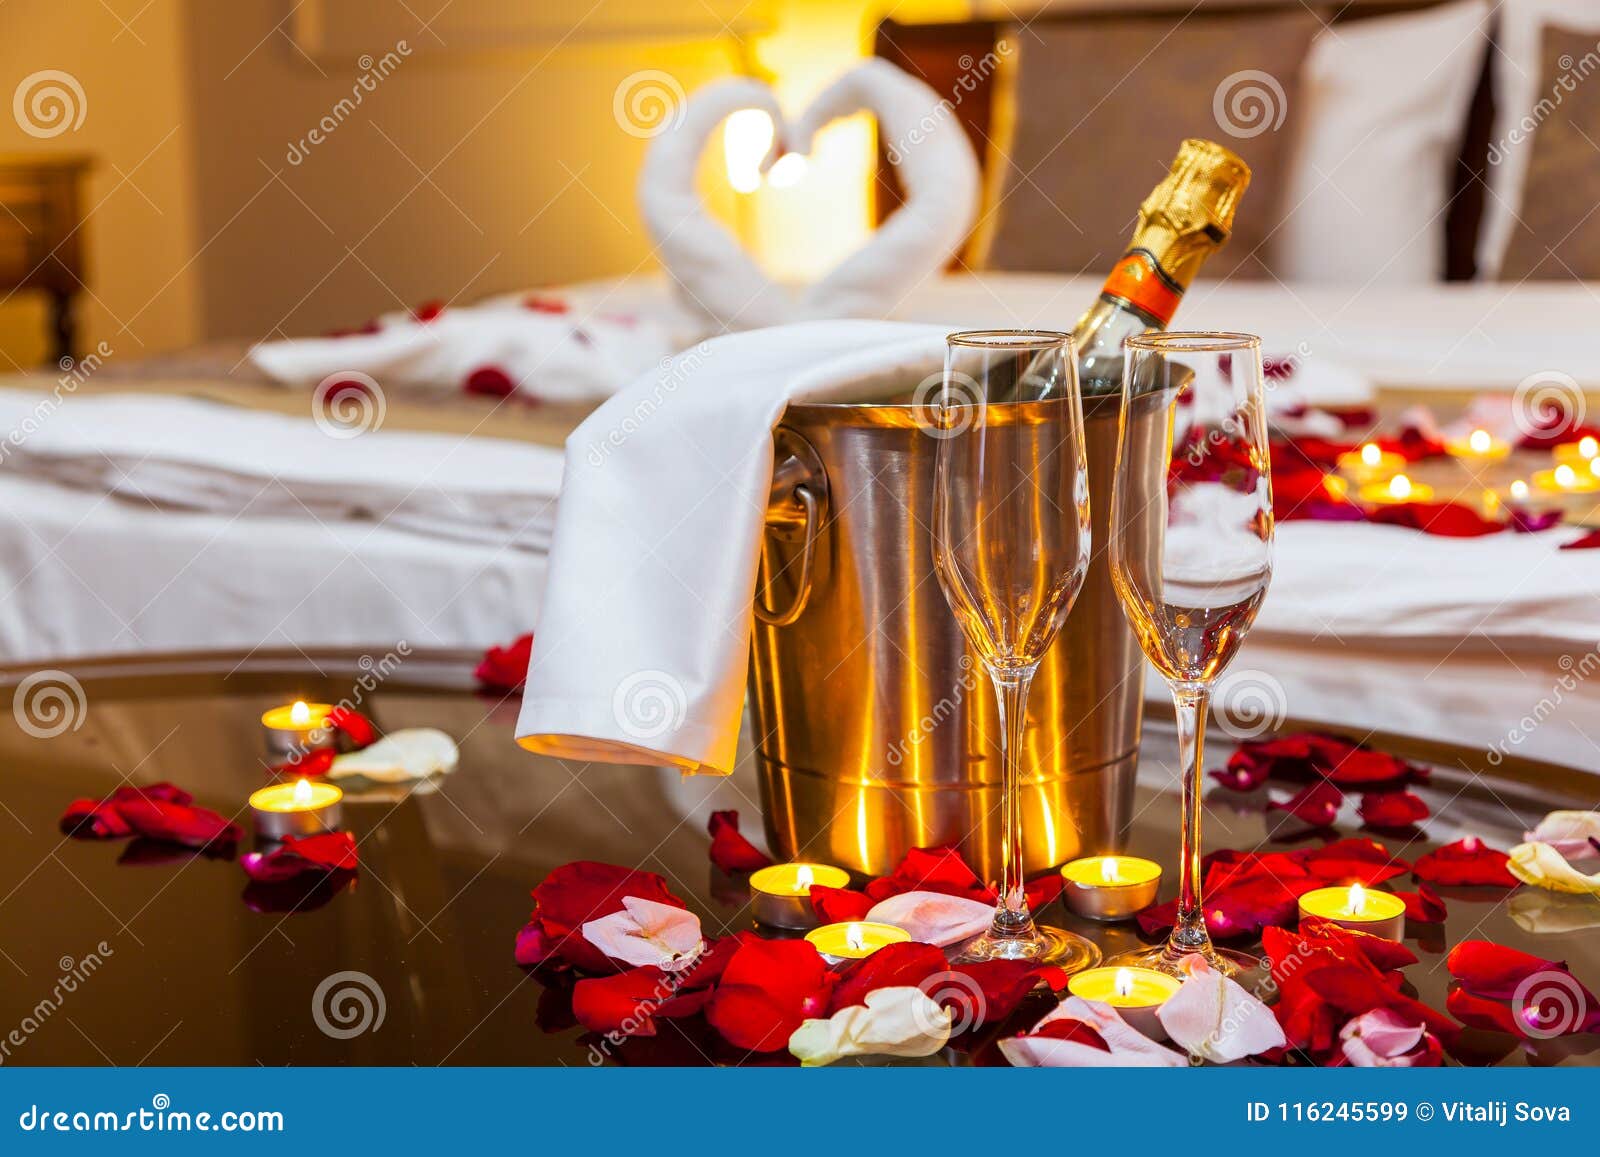 Romantic Dinner For Lovers Stock Image Image Of Motel